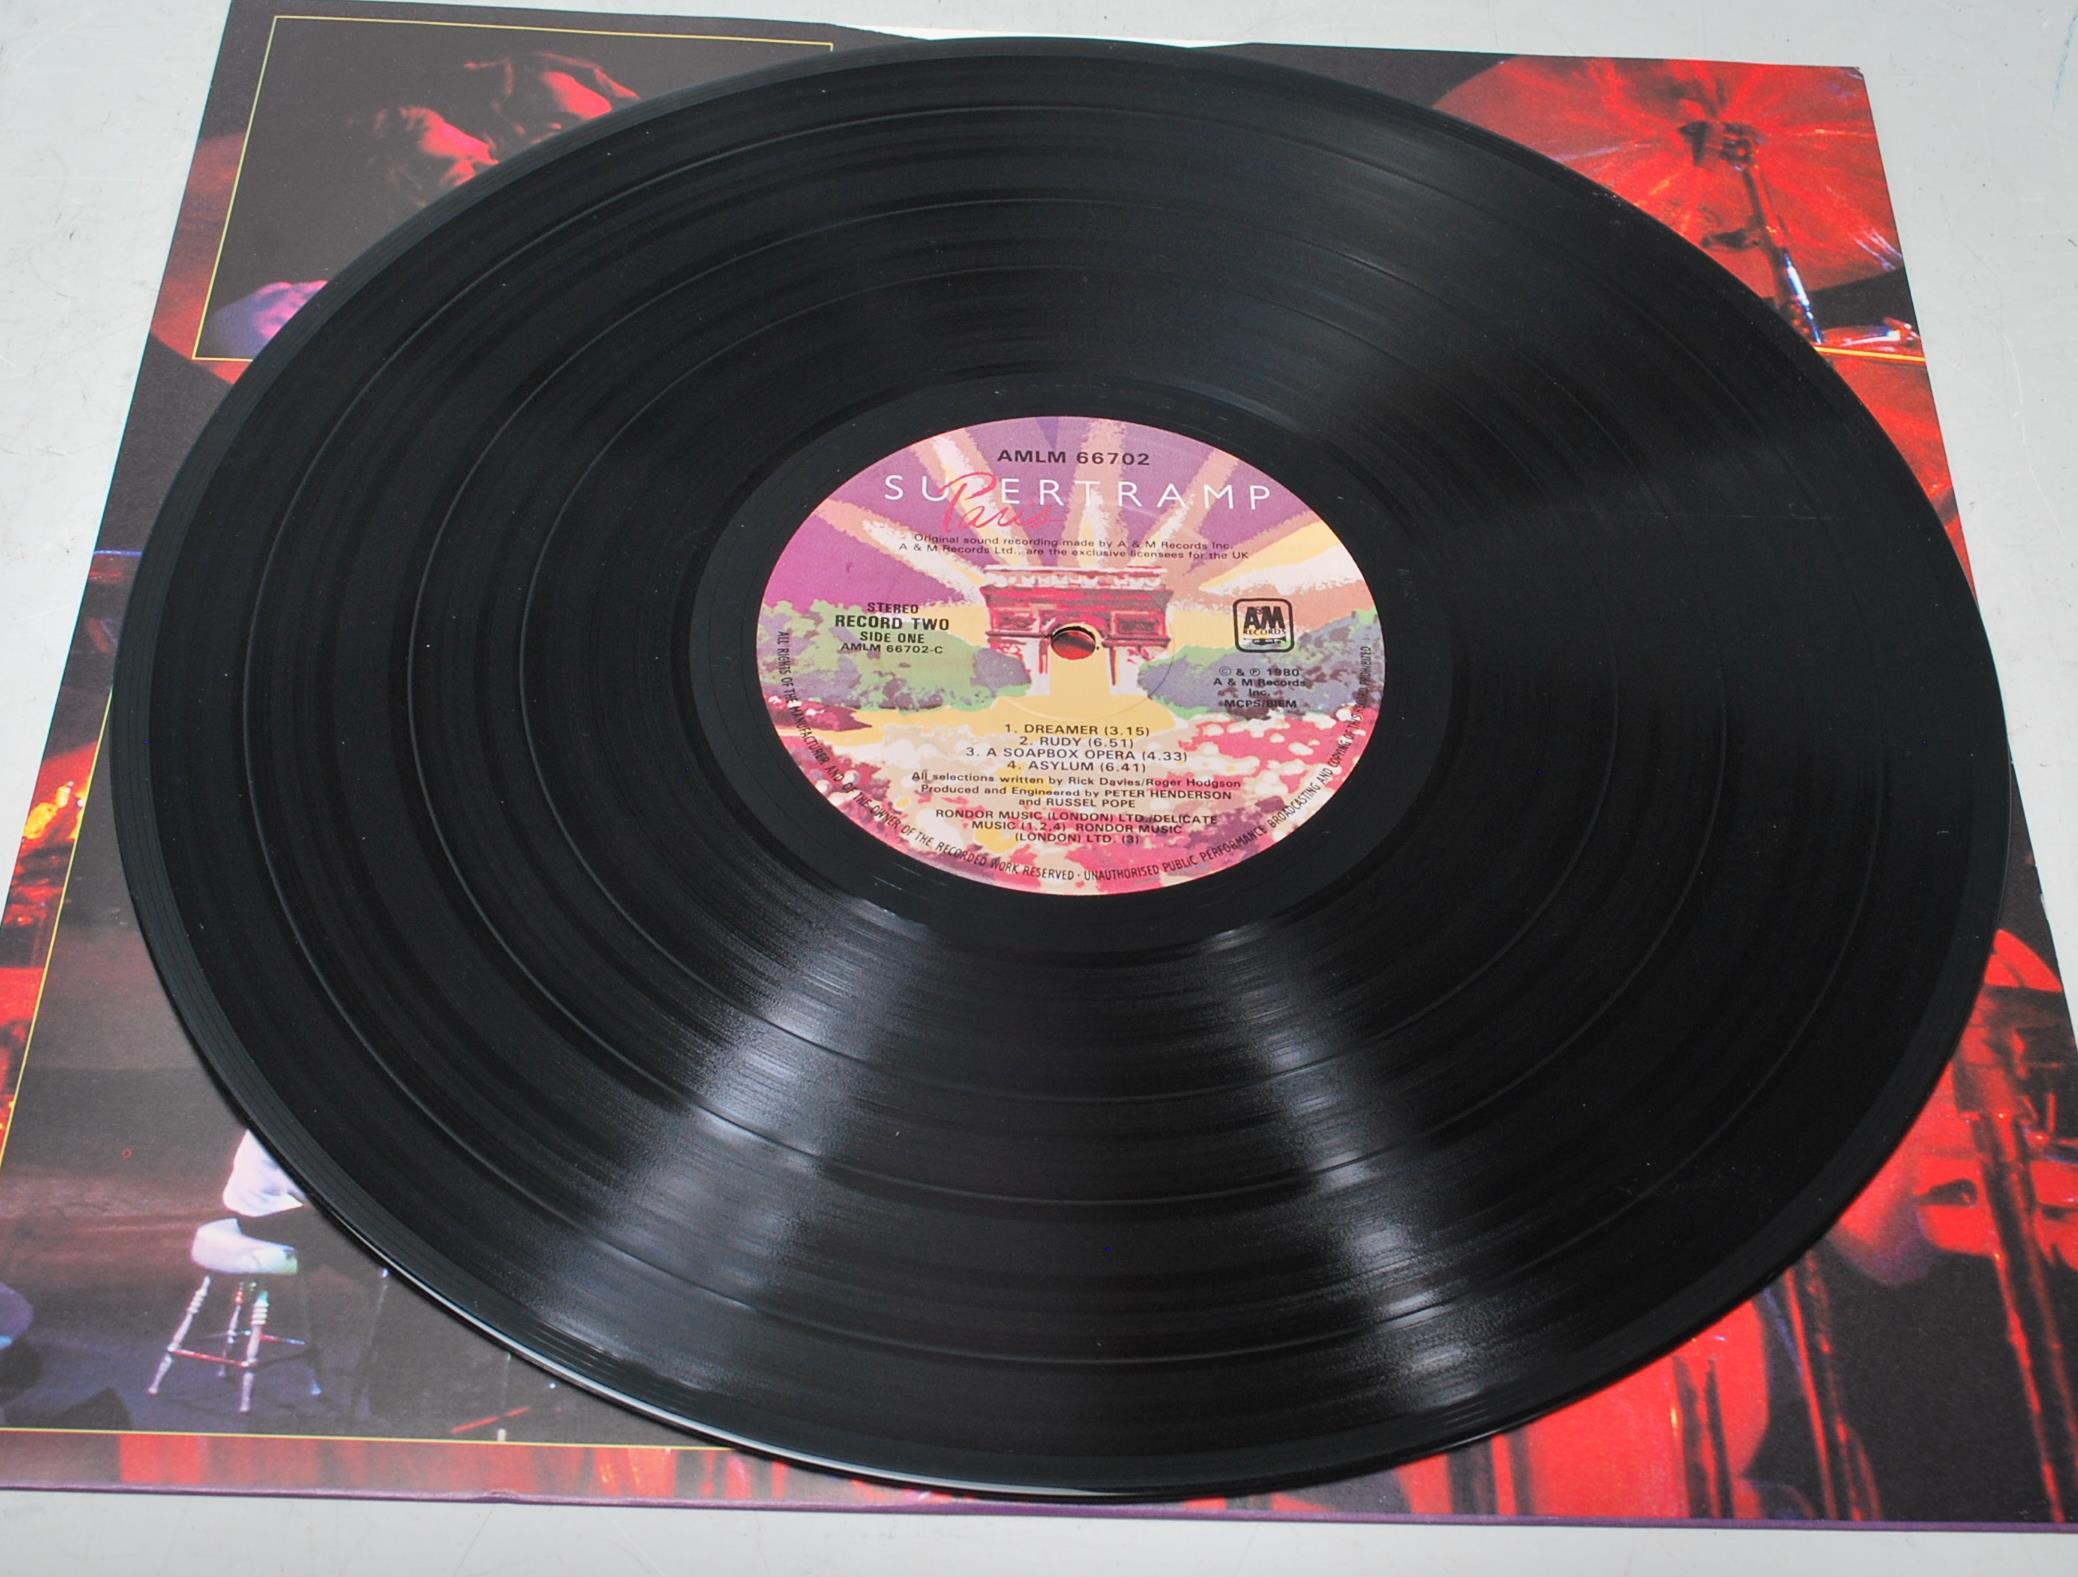 A vinyl LP long play record by Supertramp / Paris. - Image 10 of 11